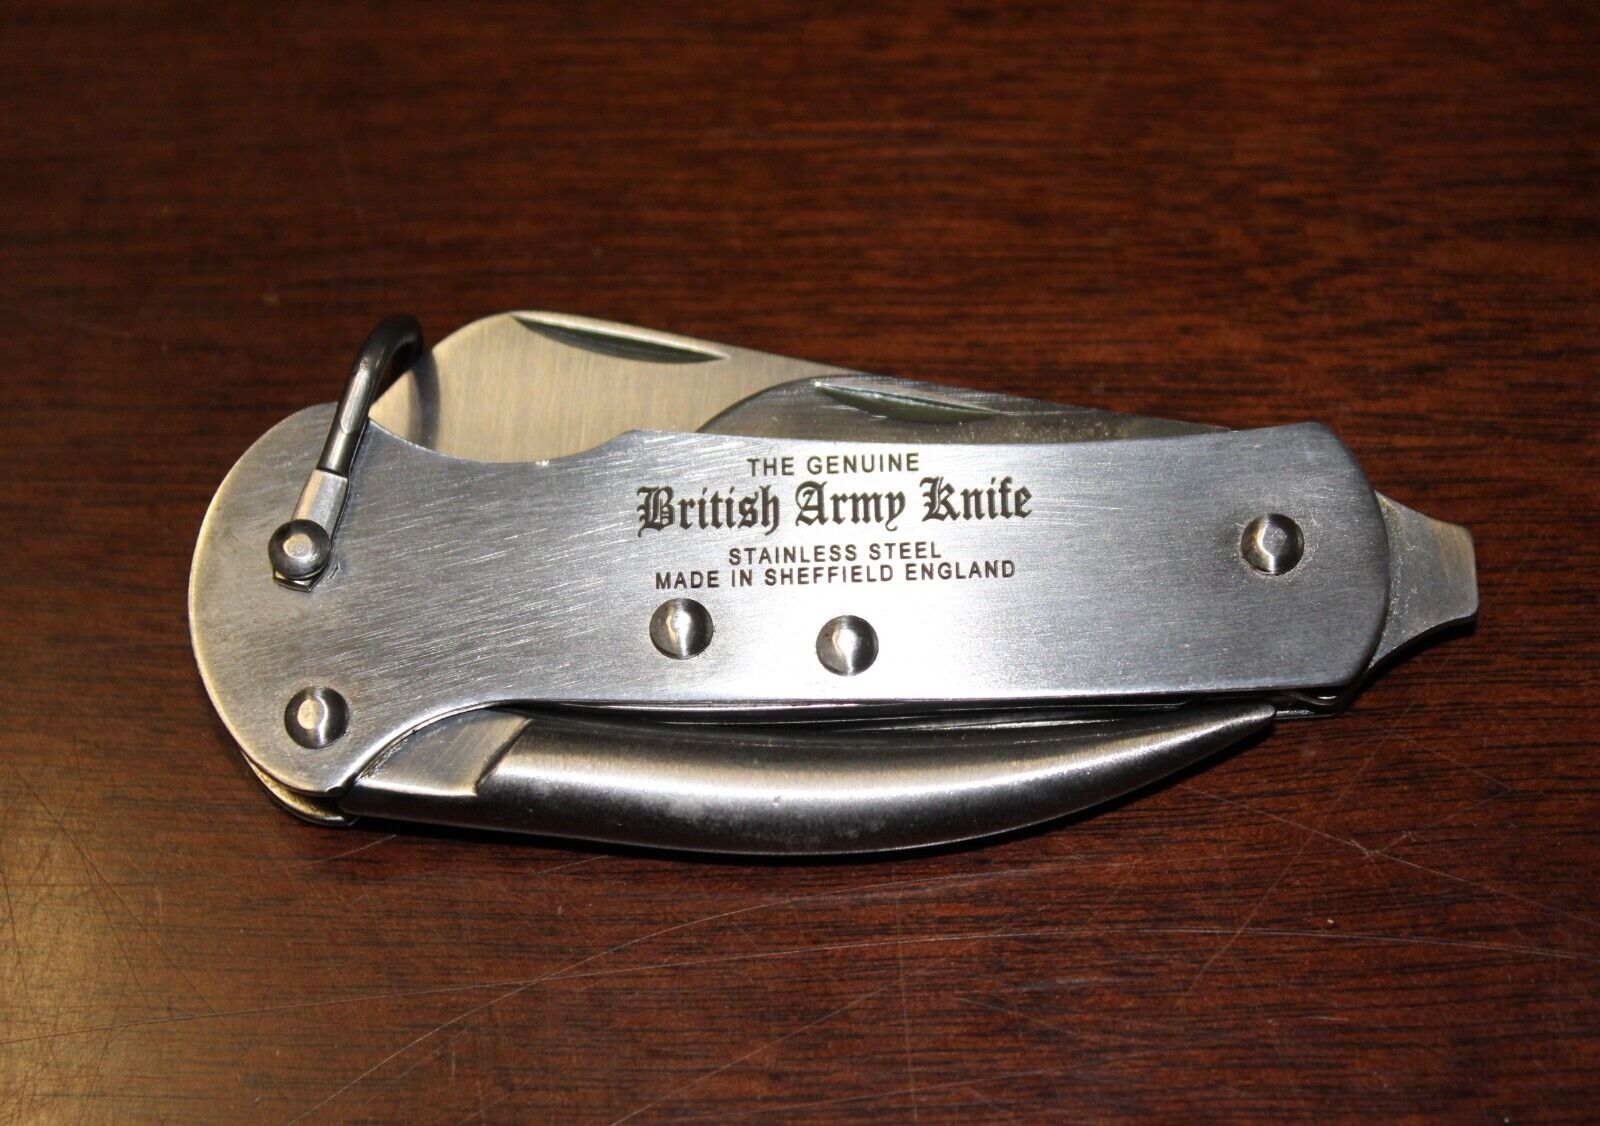 Genuine British Army Knife - stainless steel pocketknife